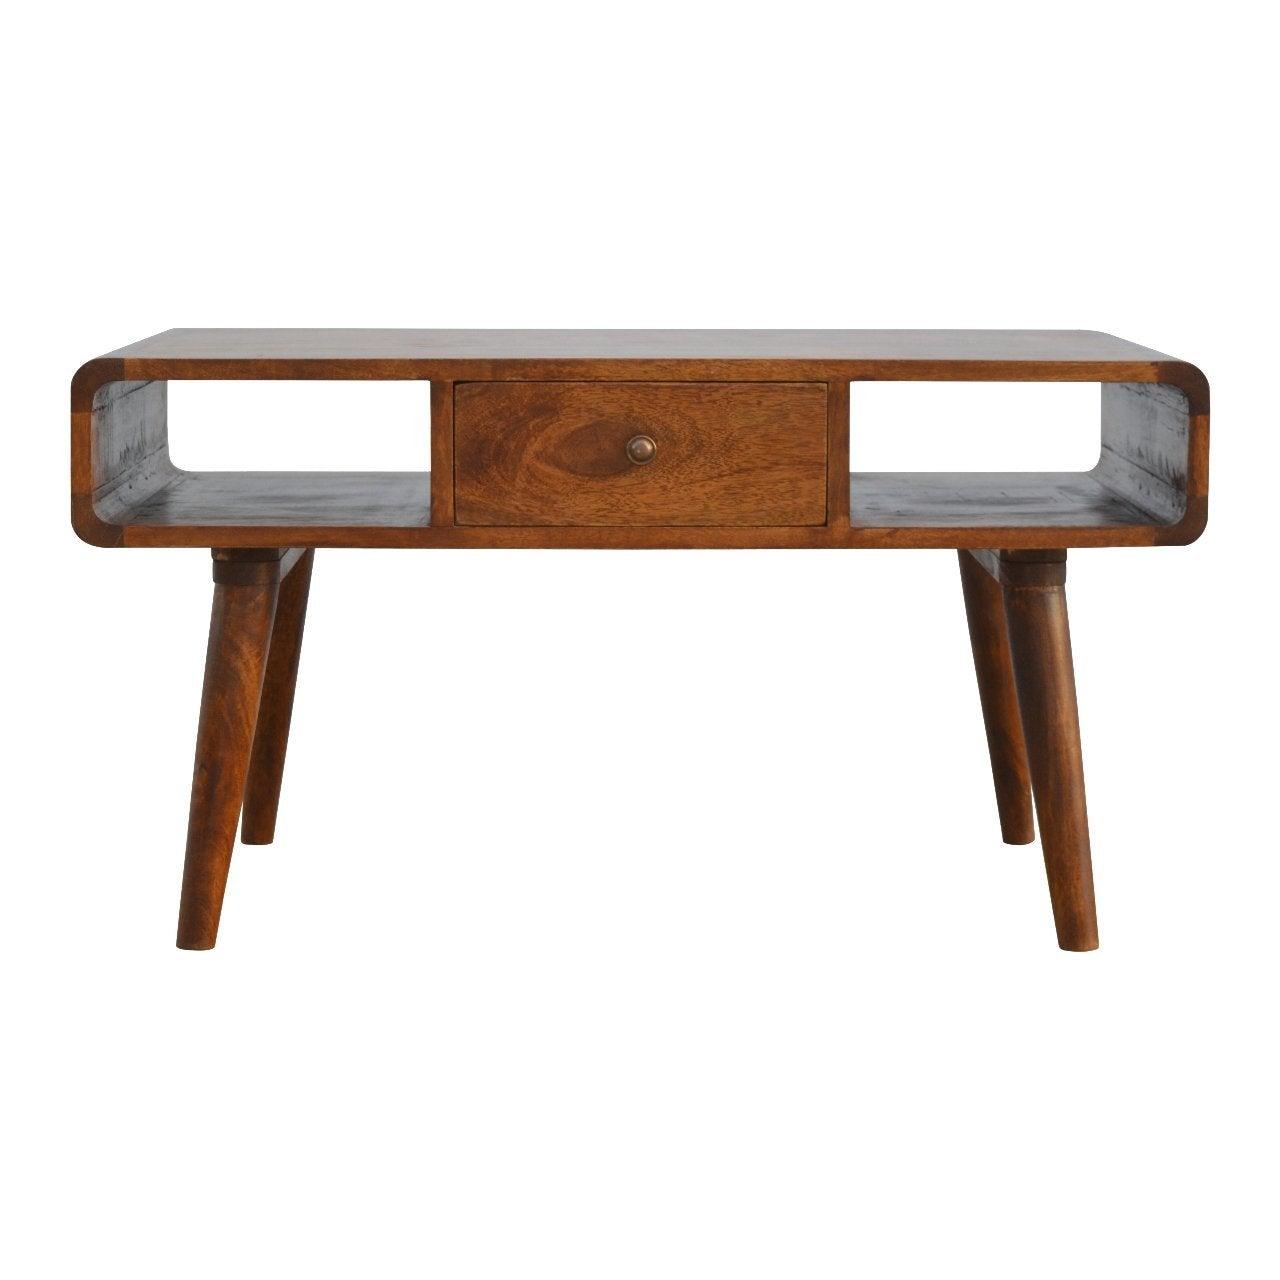 Curved chestnut coffee table - crimblefest furniture - image 1